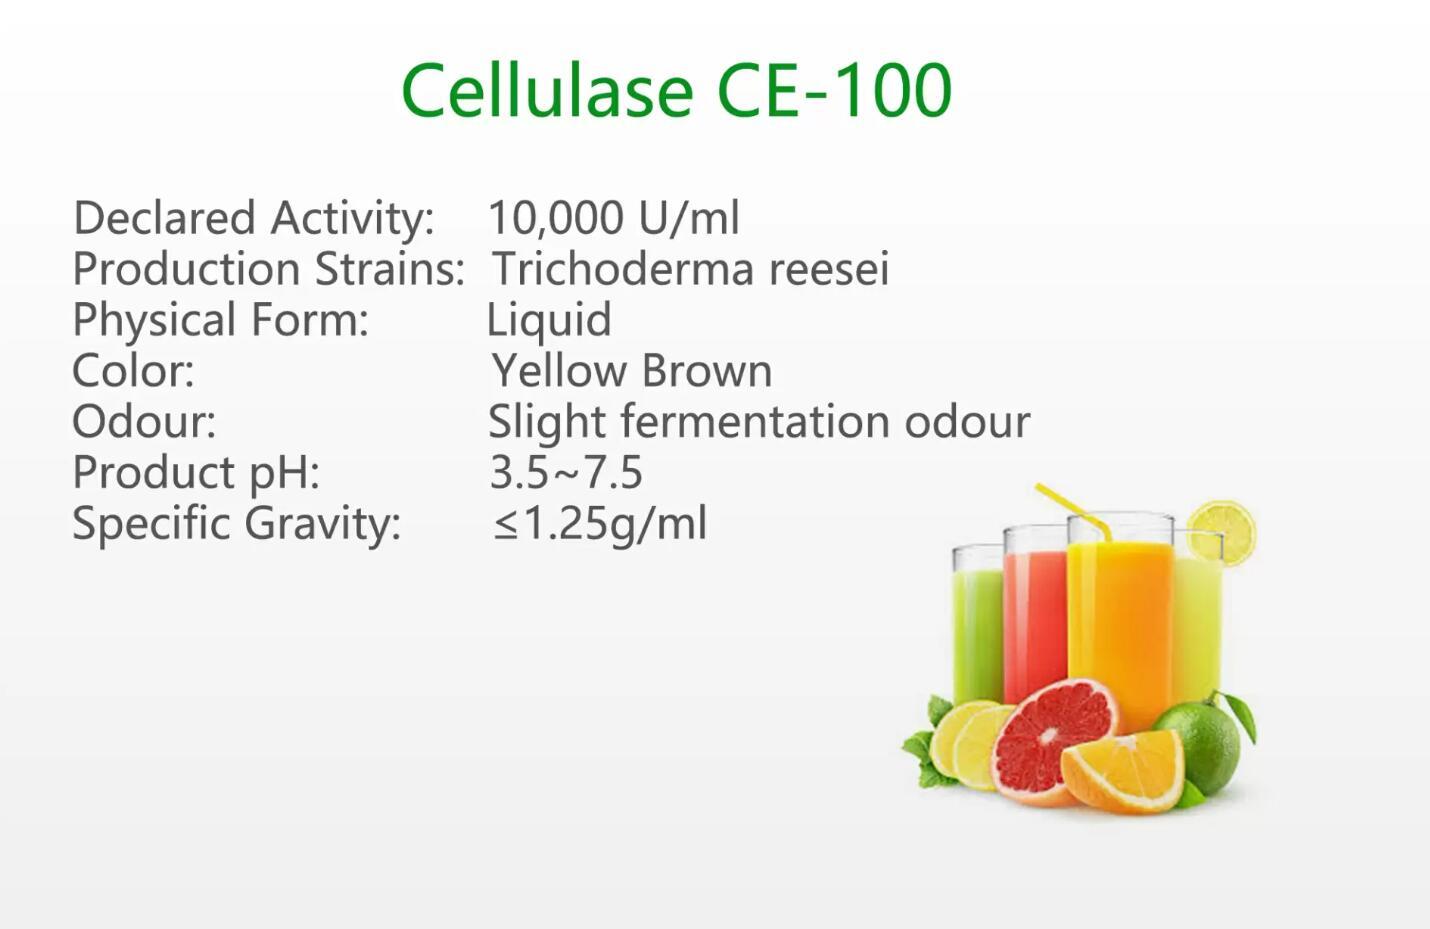 Cellulase CE-100